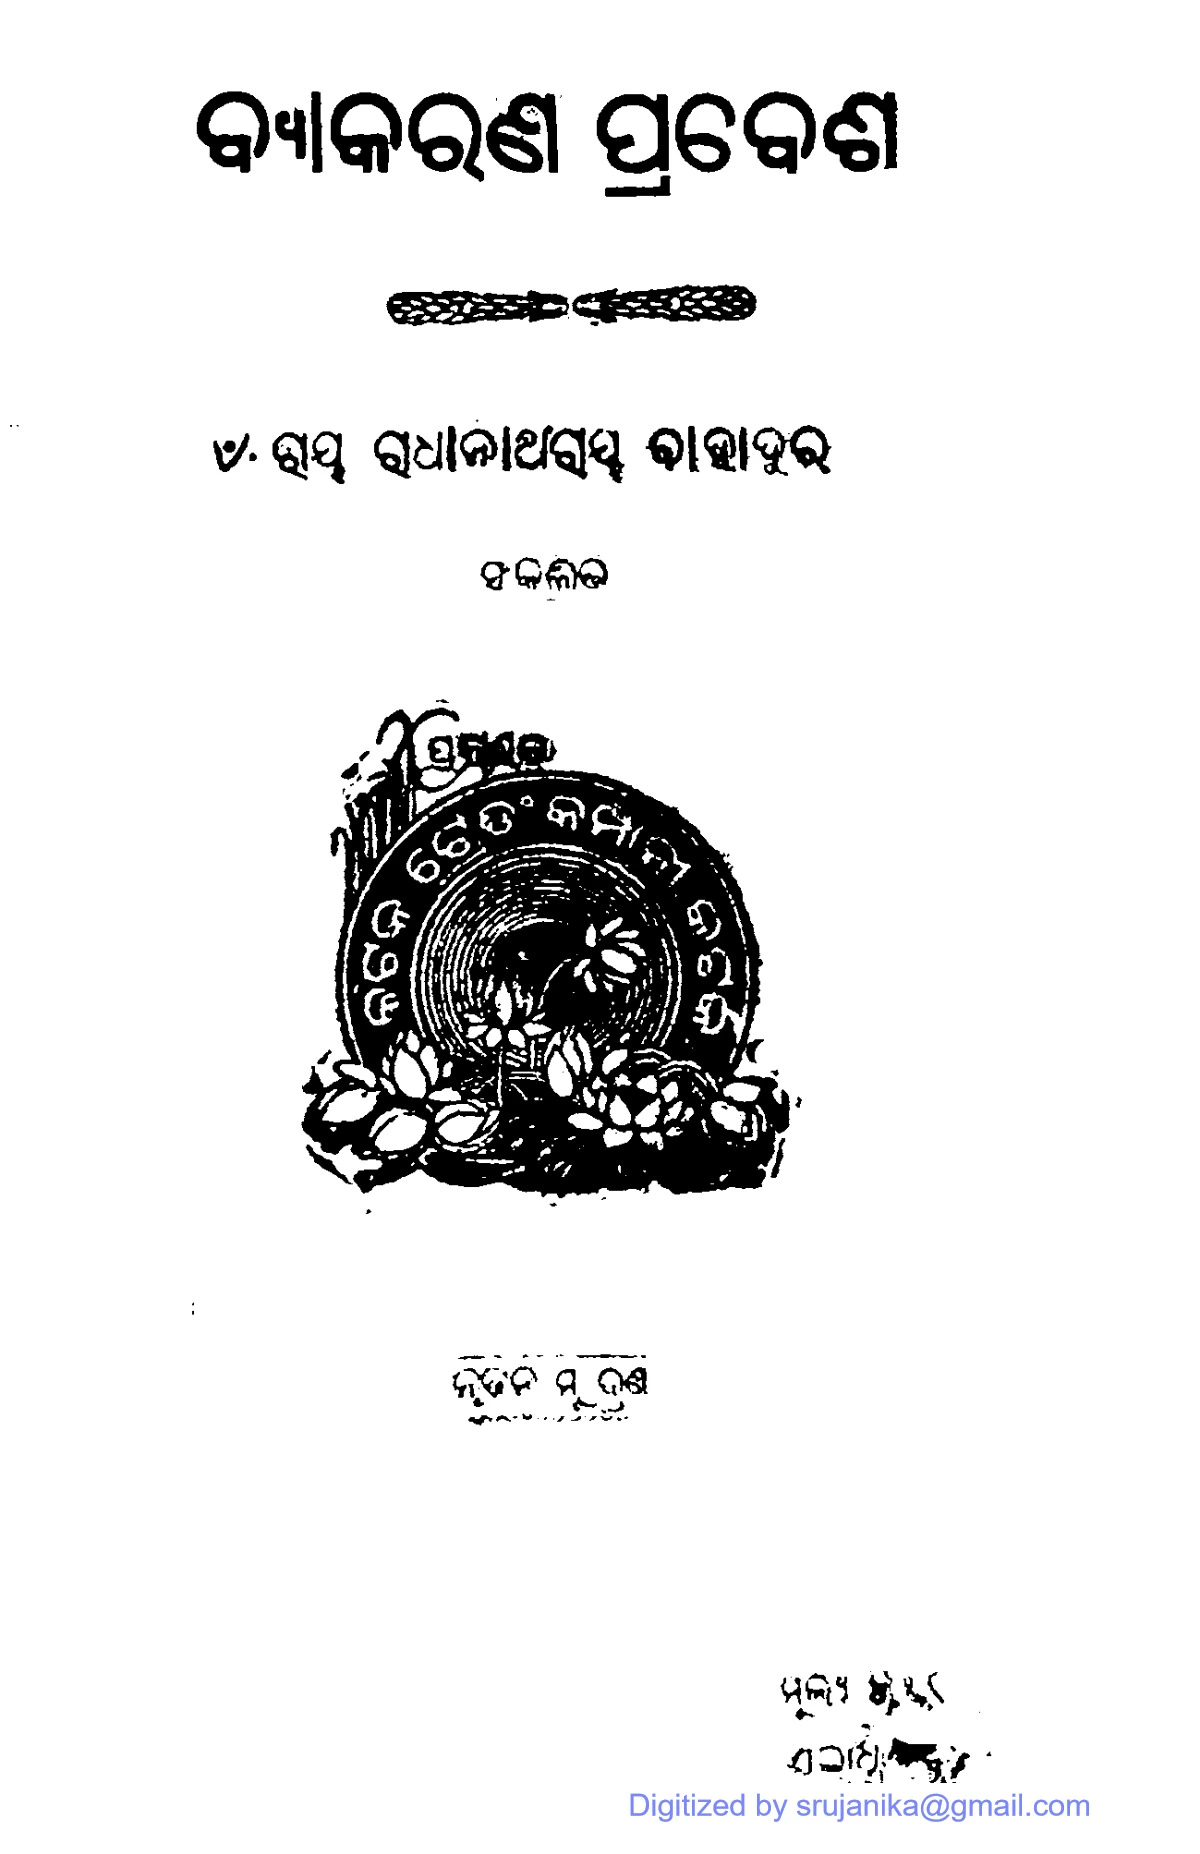 Saraswata Odia Grammar Book